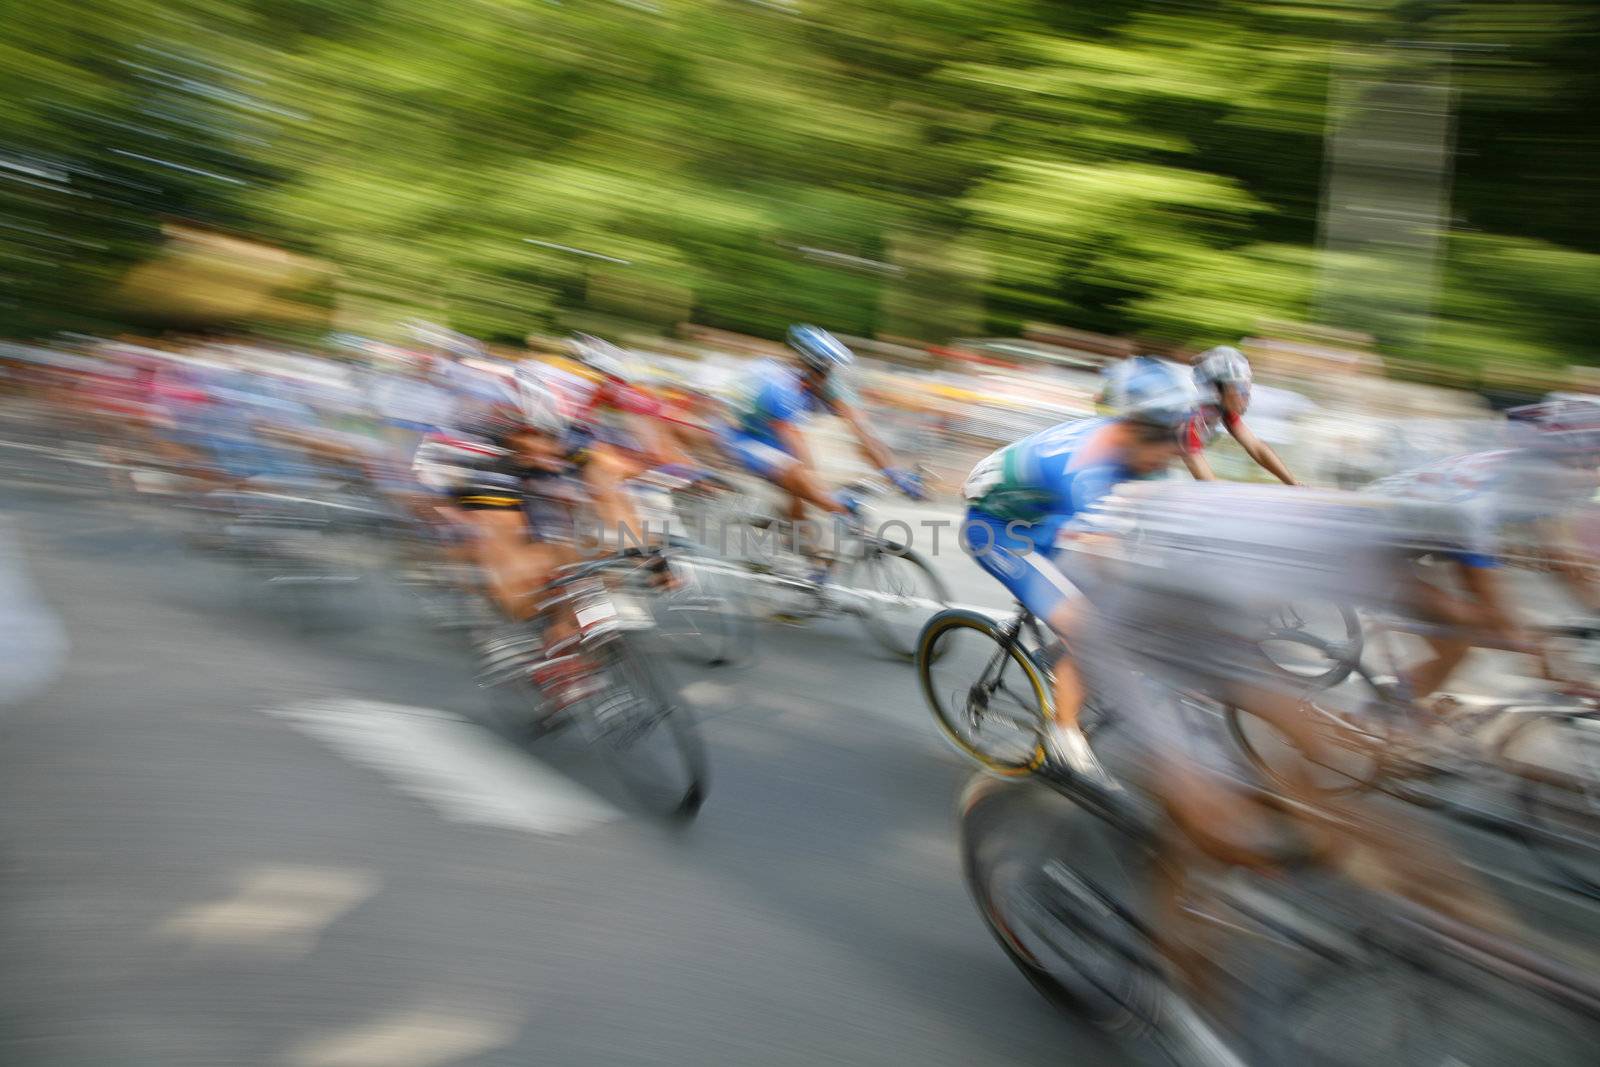 Speedy cyclists by ABCDK